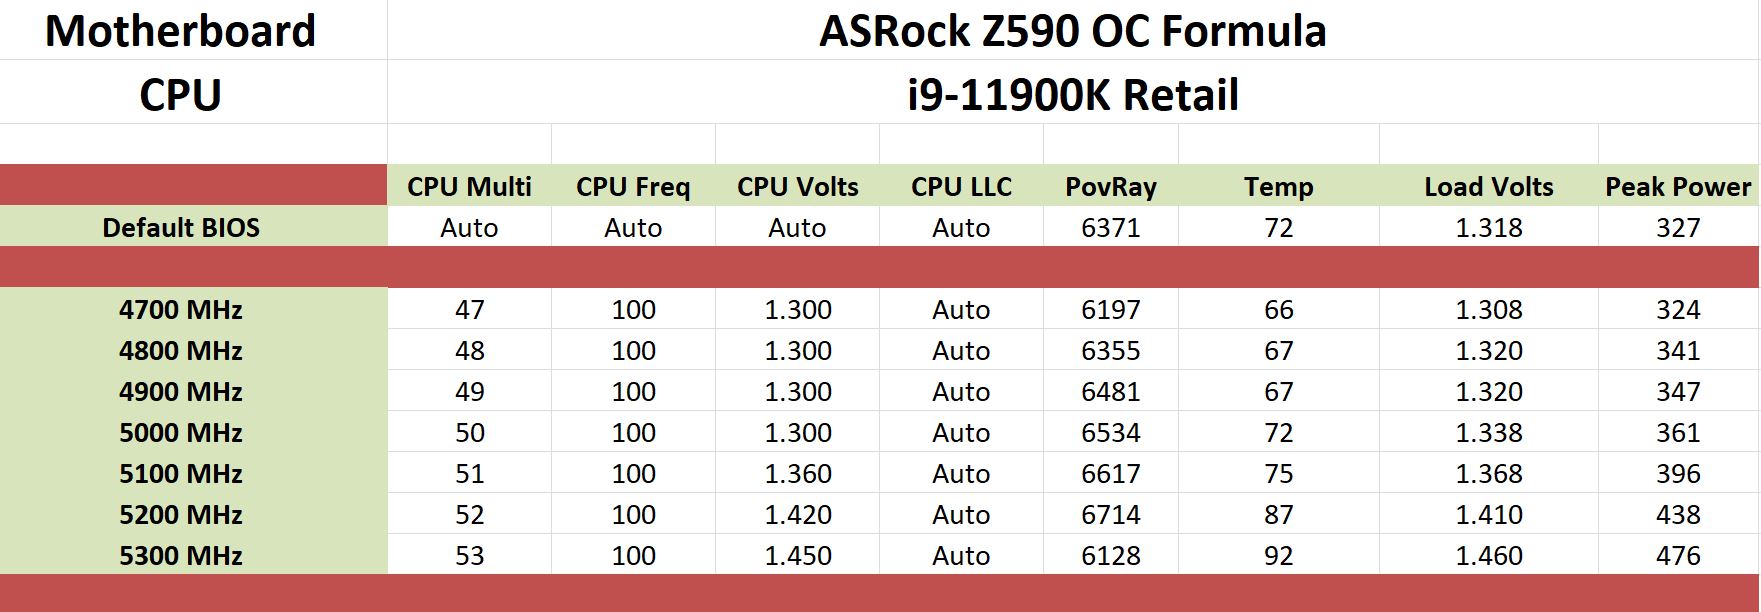 igorslab.de] ASRock Z590 OC Formula Review (feel free to leave